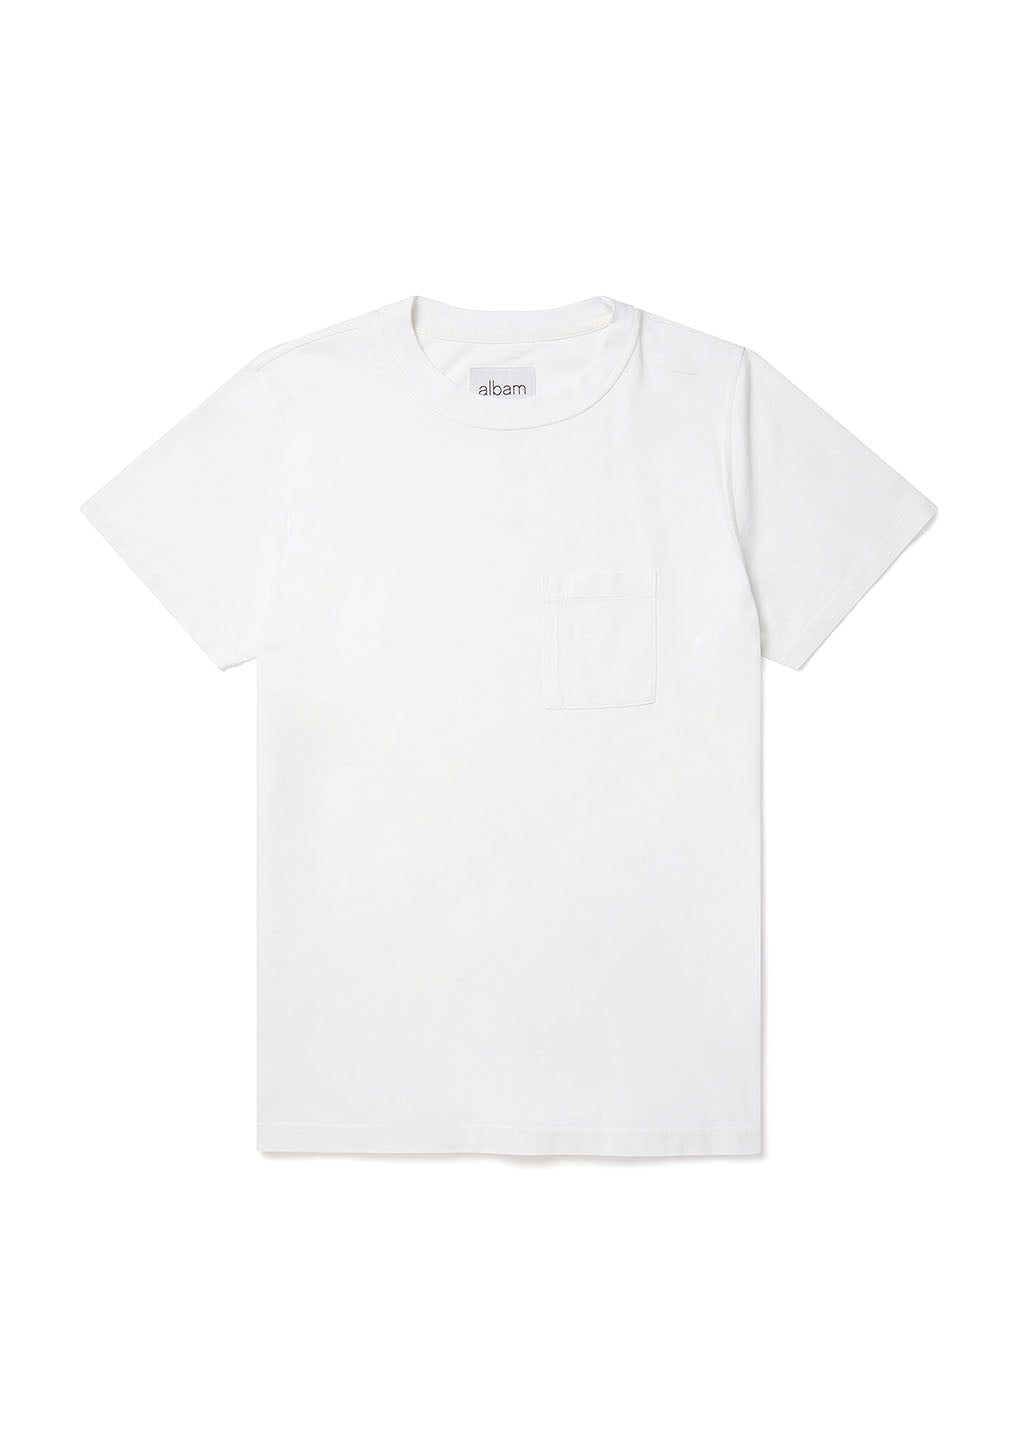 Albam SS Workwear T-Shirt - White